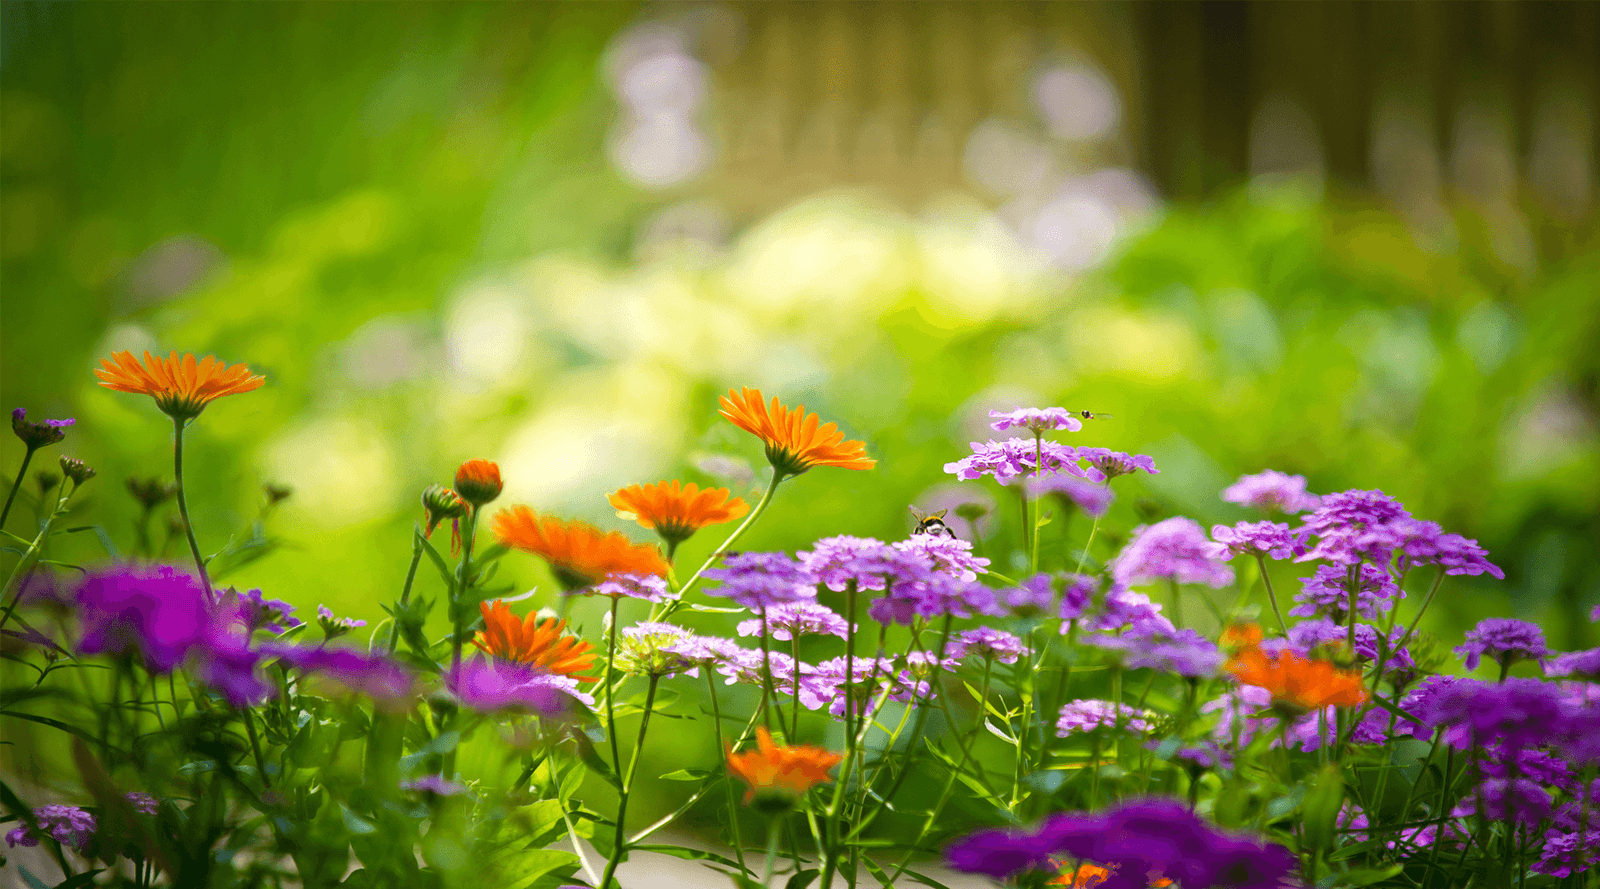 Decoupage Paper Napkins of backyard Garden Summer Flowers with Wheelbarrow  and Bird